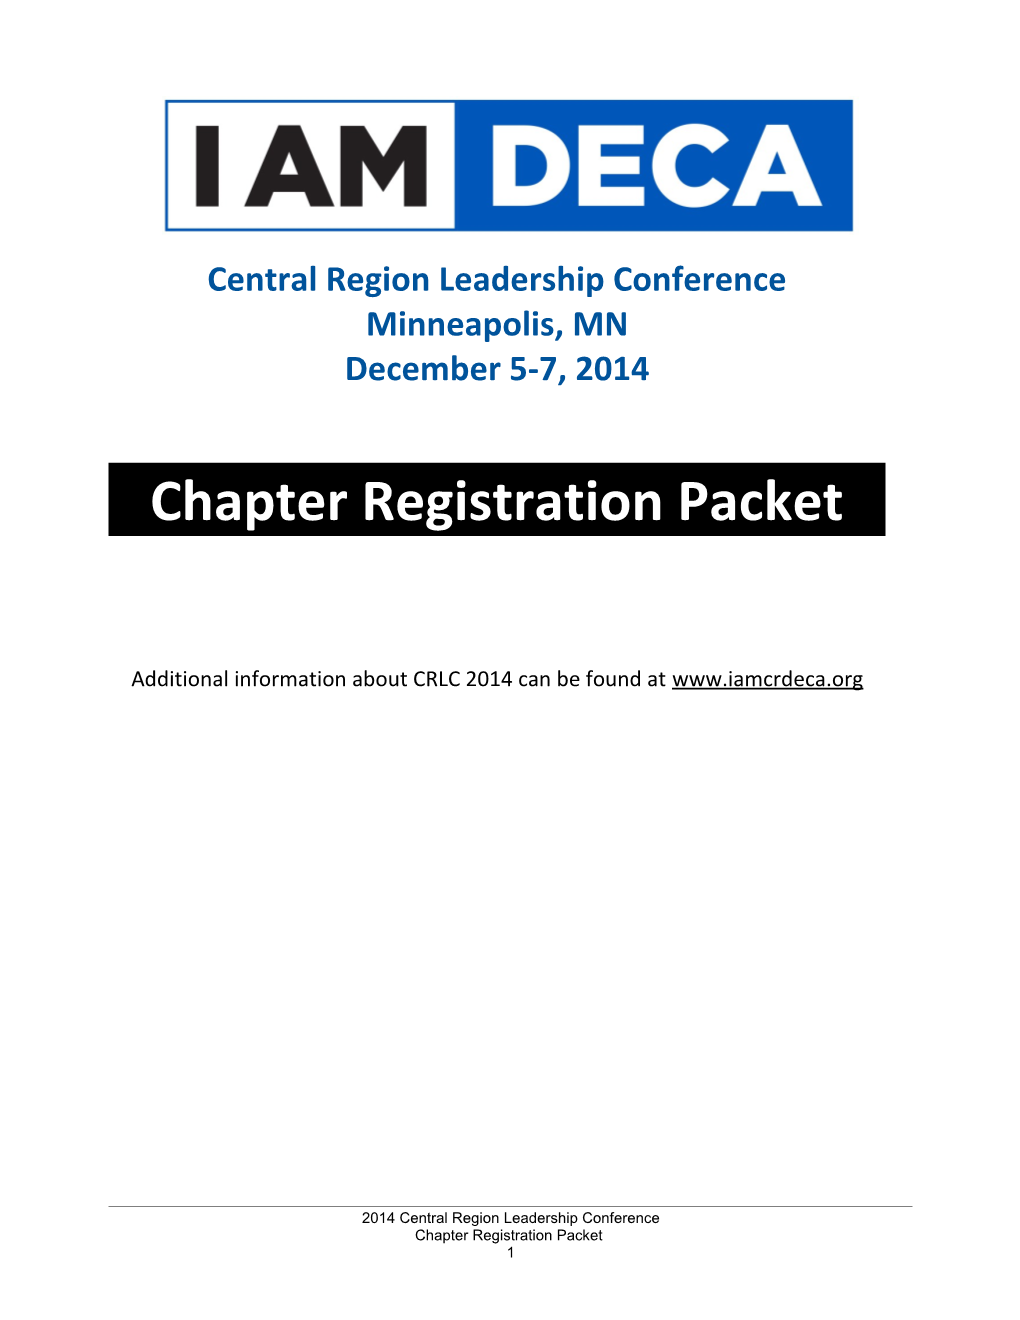 2006 CRLC Chapter Registration Packet